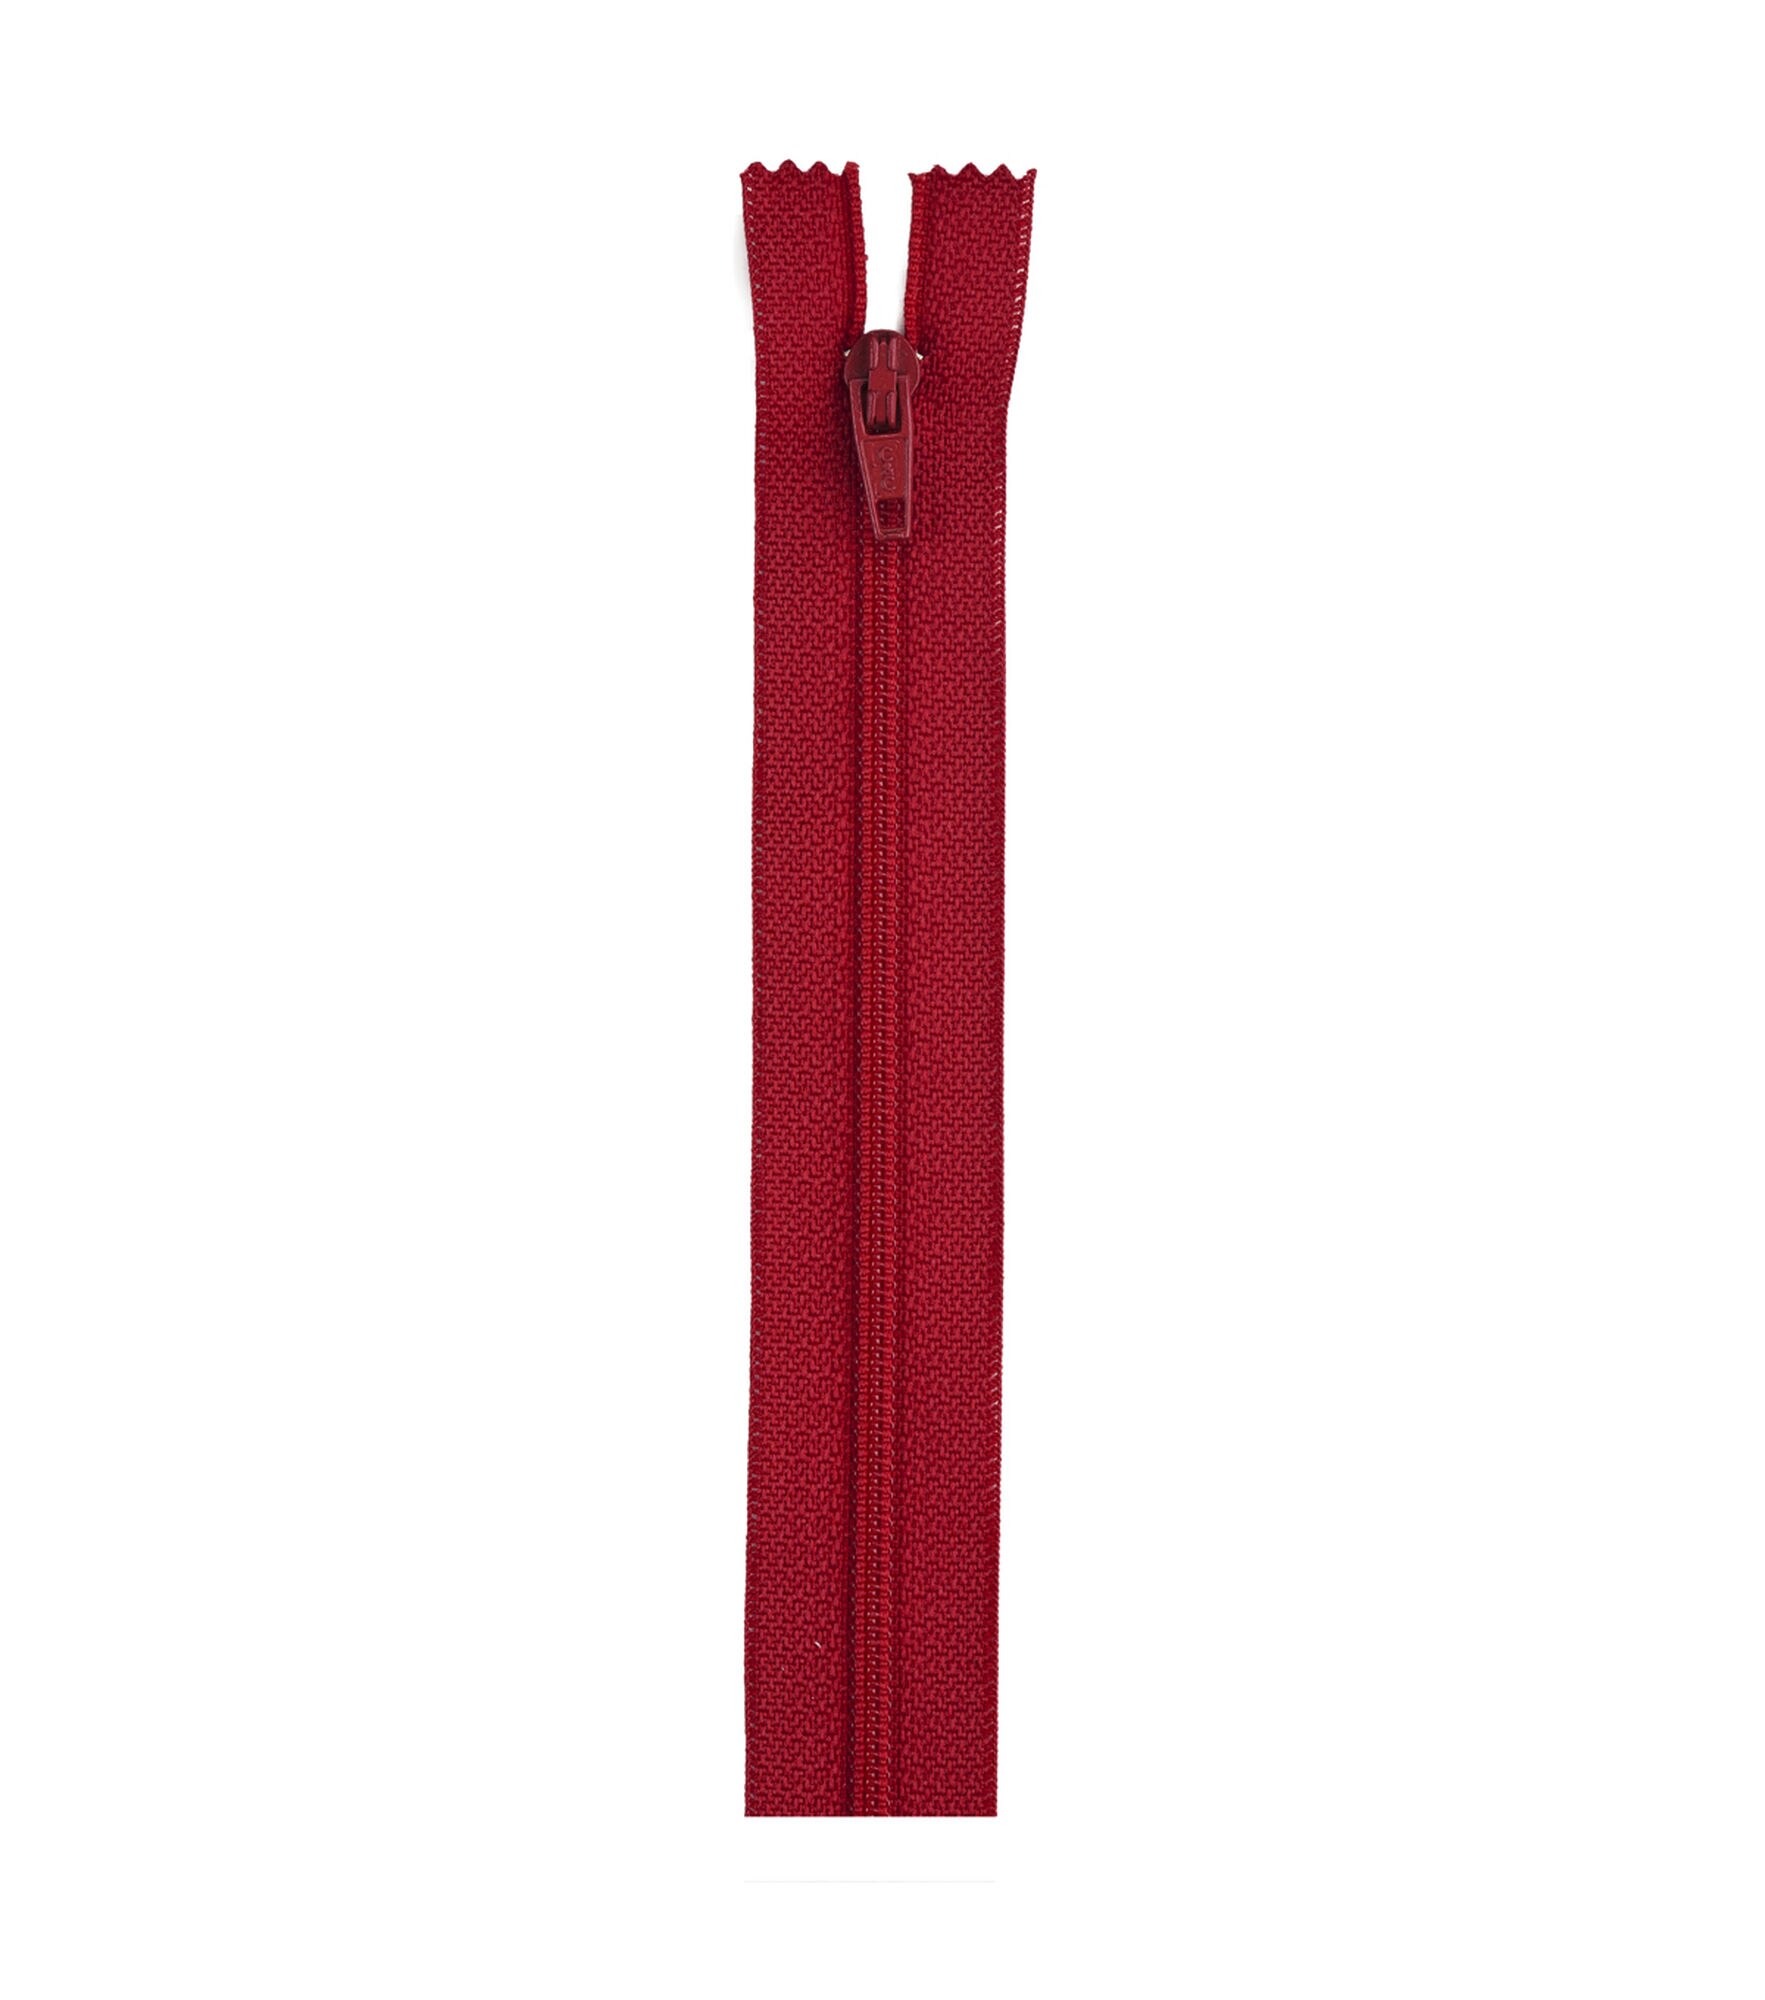 Coats & Clark Lightweight Separating Zipper 16", Red, hi-res